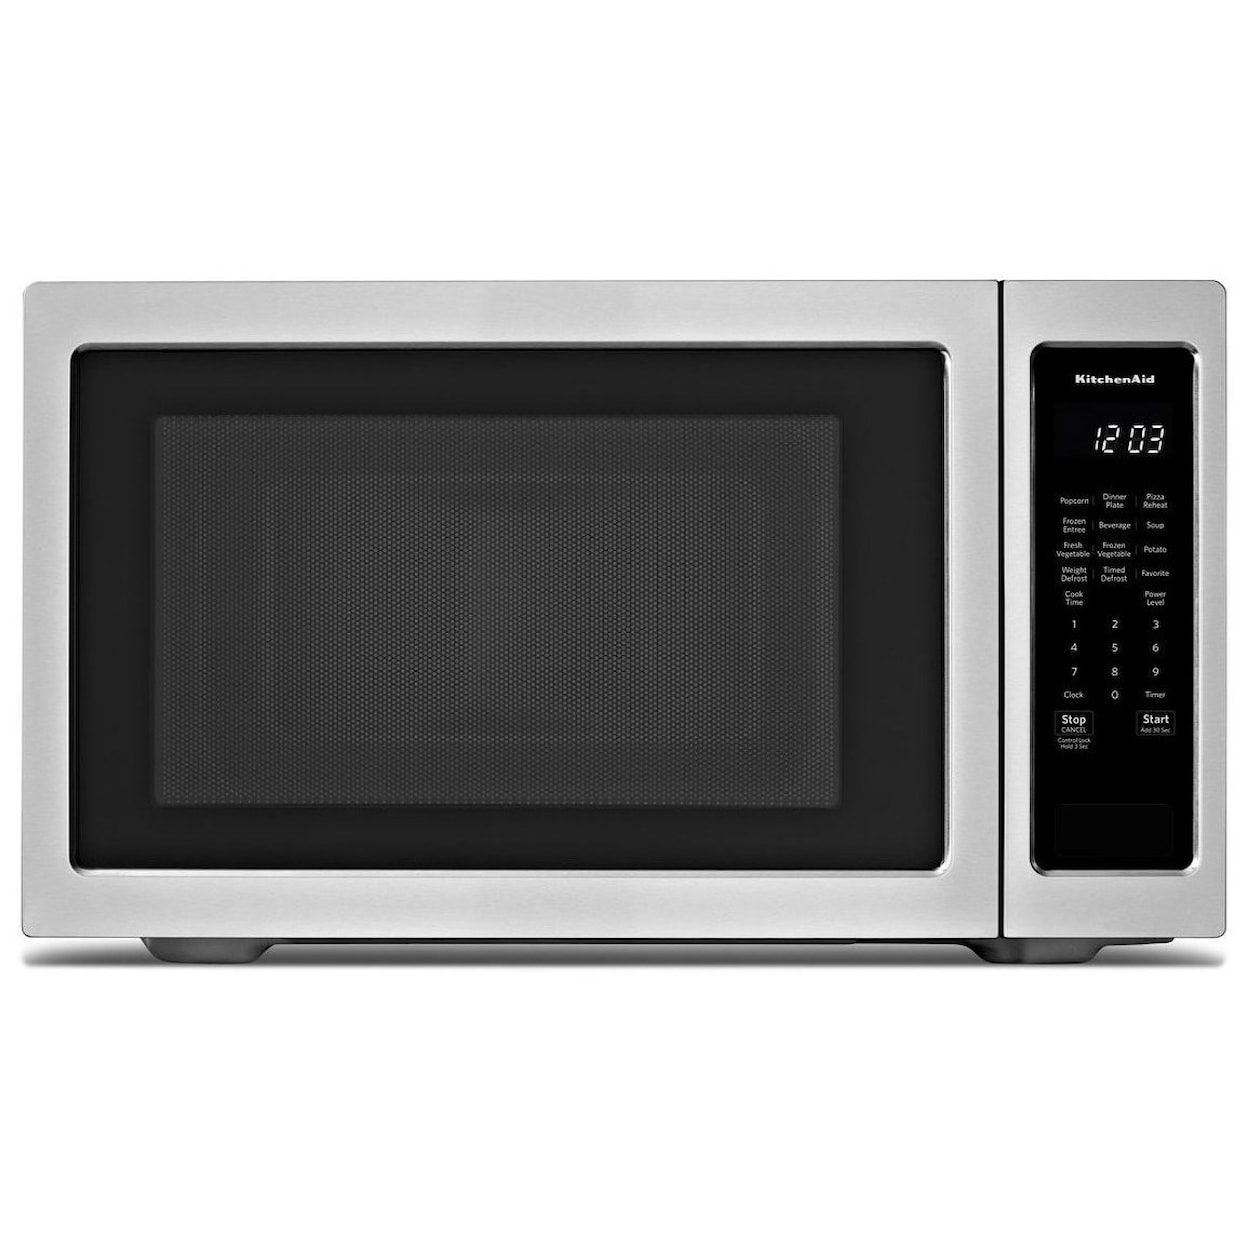 KitchenAid Microwaves - Kitchenaid 24" Countertop Microwave Oven